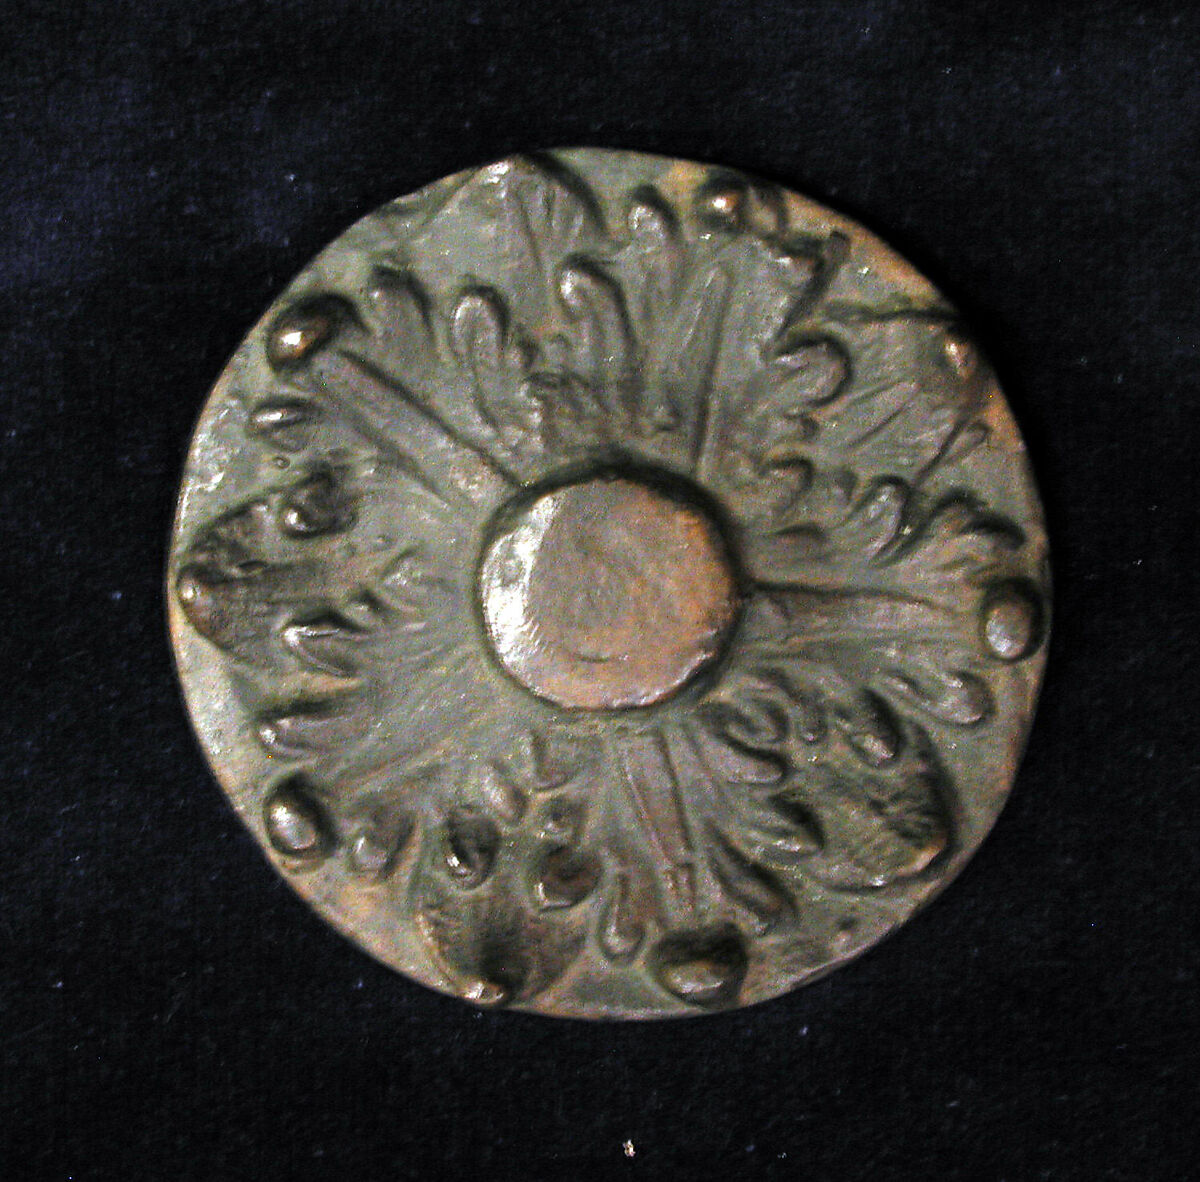 Anvil, Bronze, British, after Italian, Venice original 